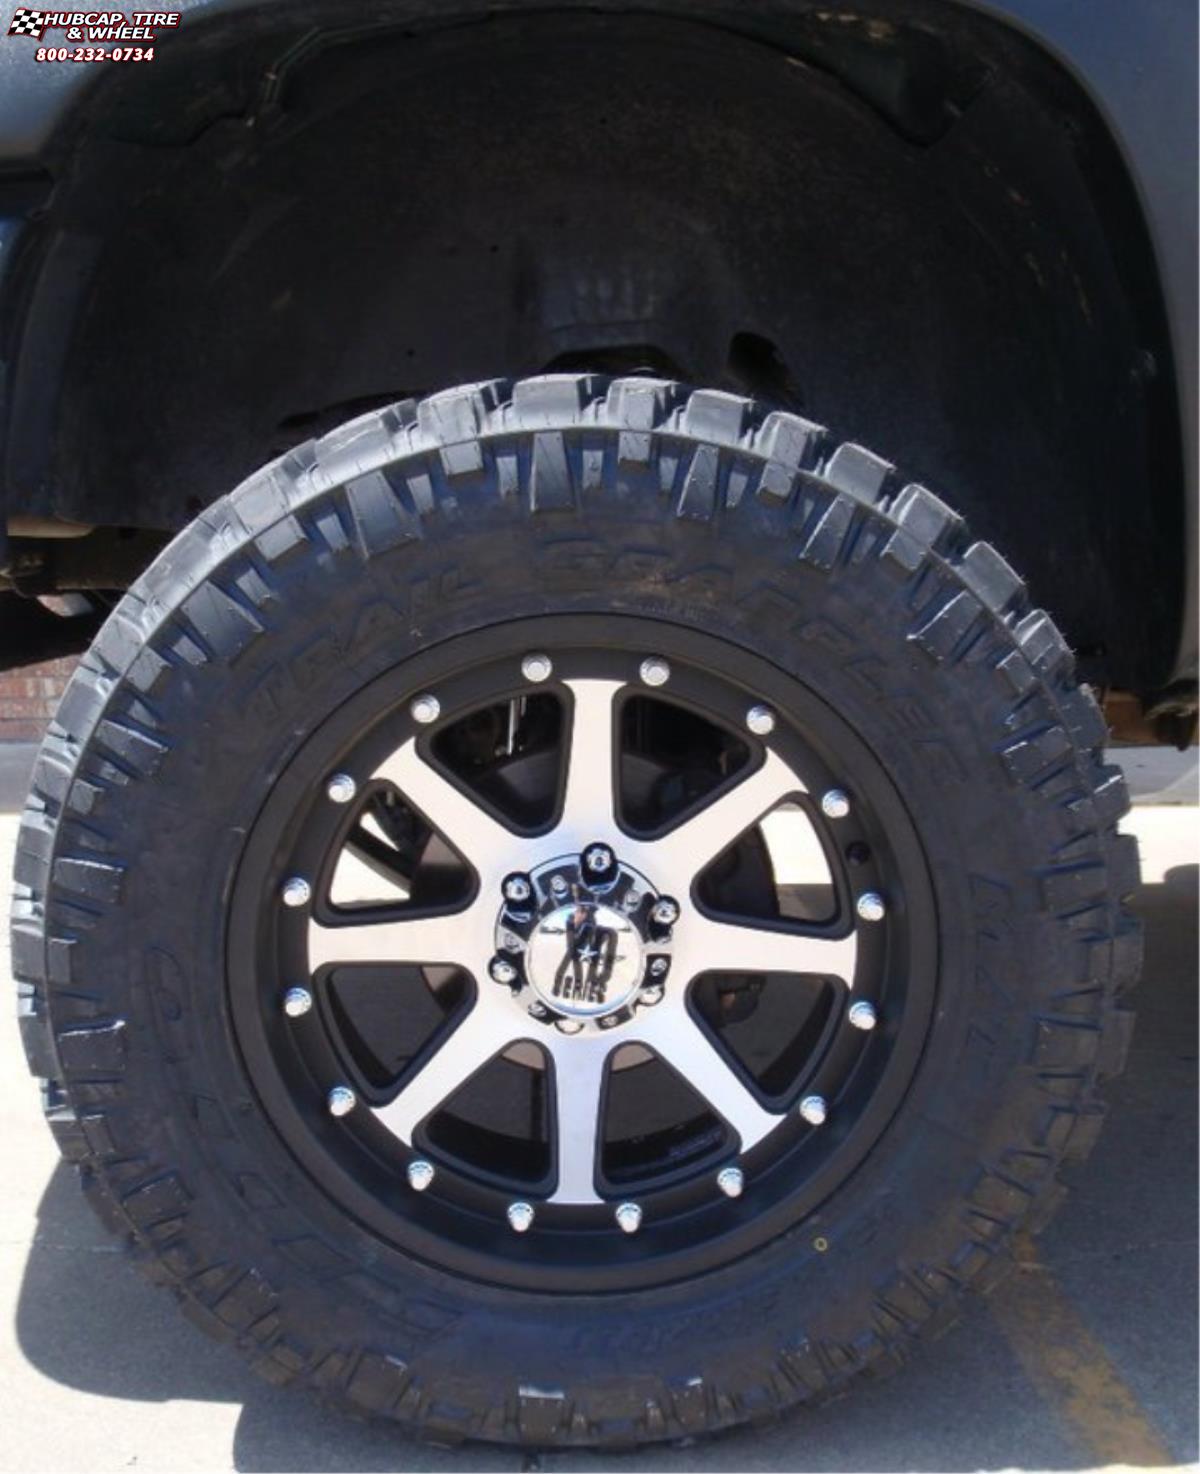 vehicle gallery/chevrolet silverado 1500 xd series xd798 addict  Matte Black Machined wheels and rims